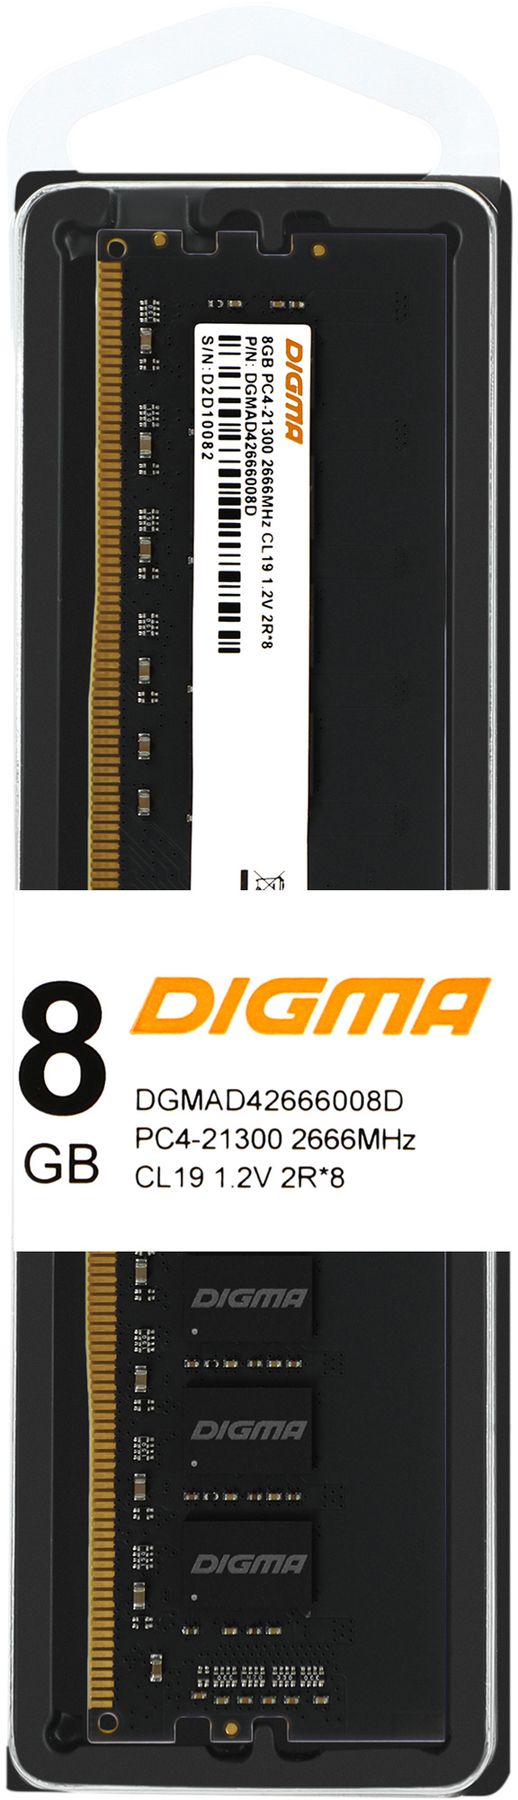 цена Оперативная память DDR4 Digma 8Gb 2666MHz DIMM (DGMAD42666008D)